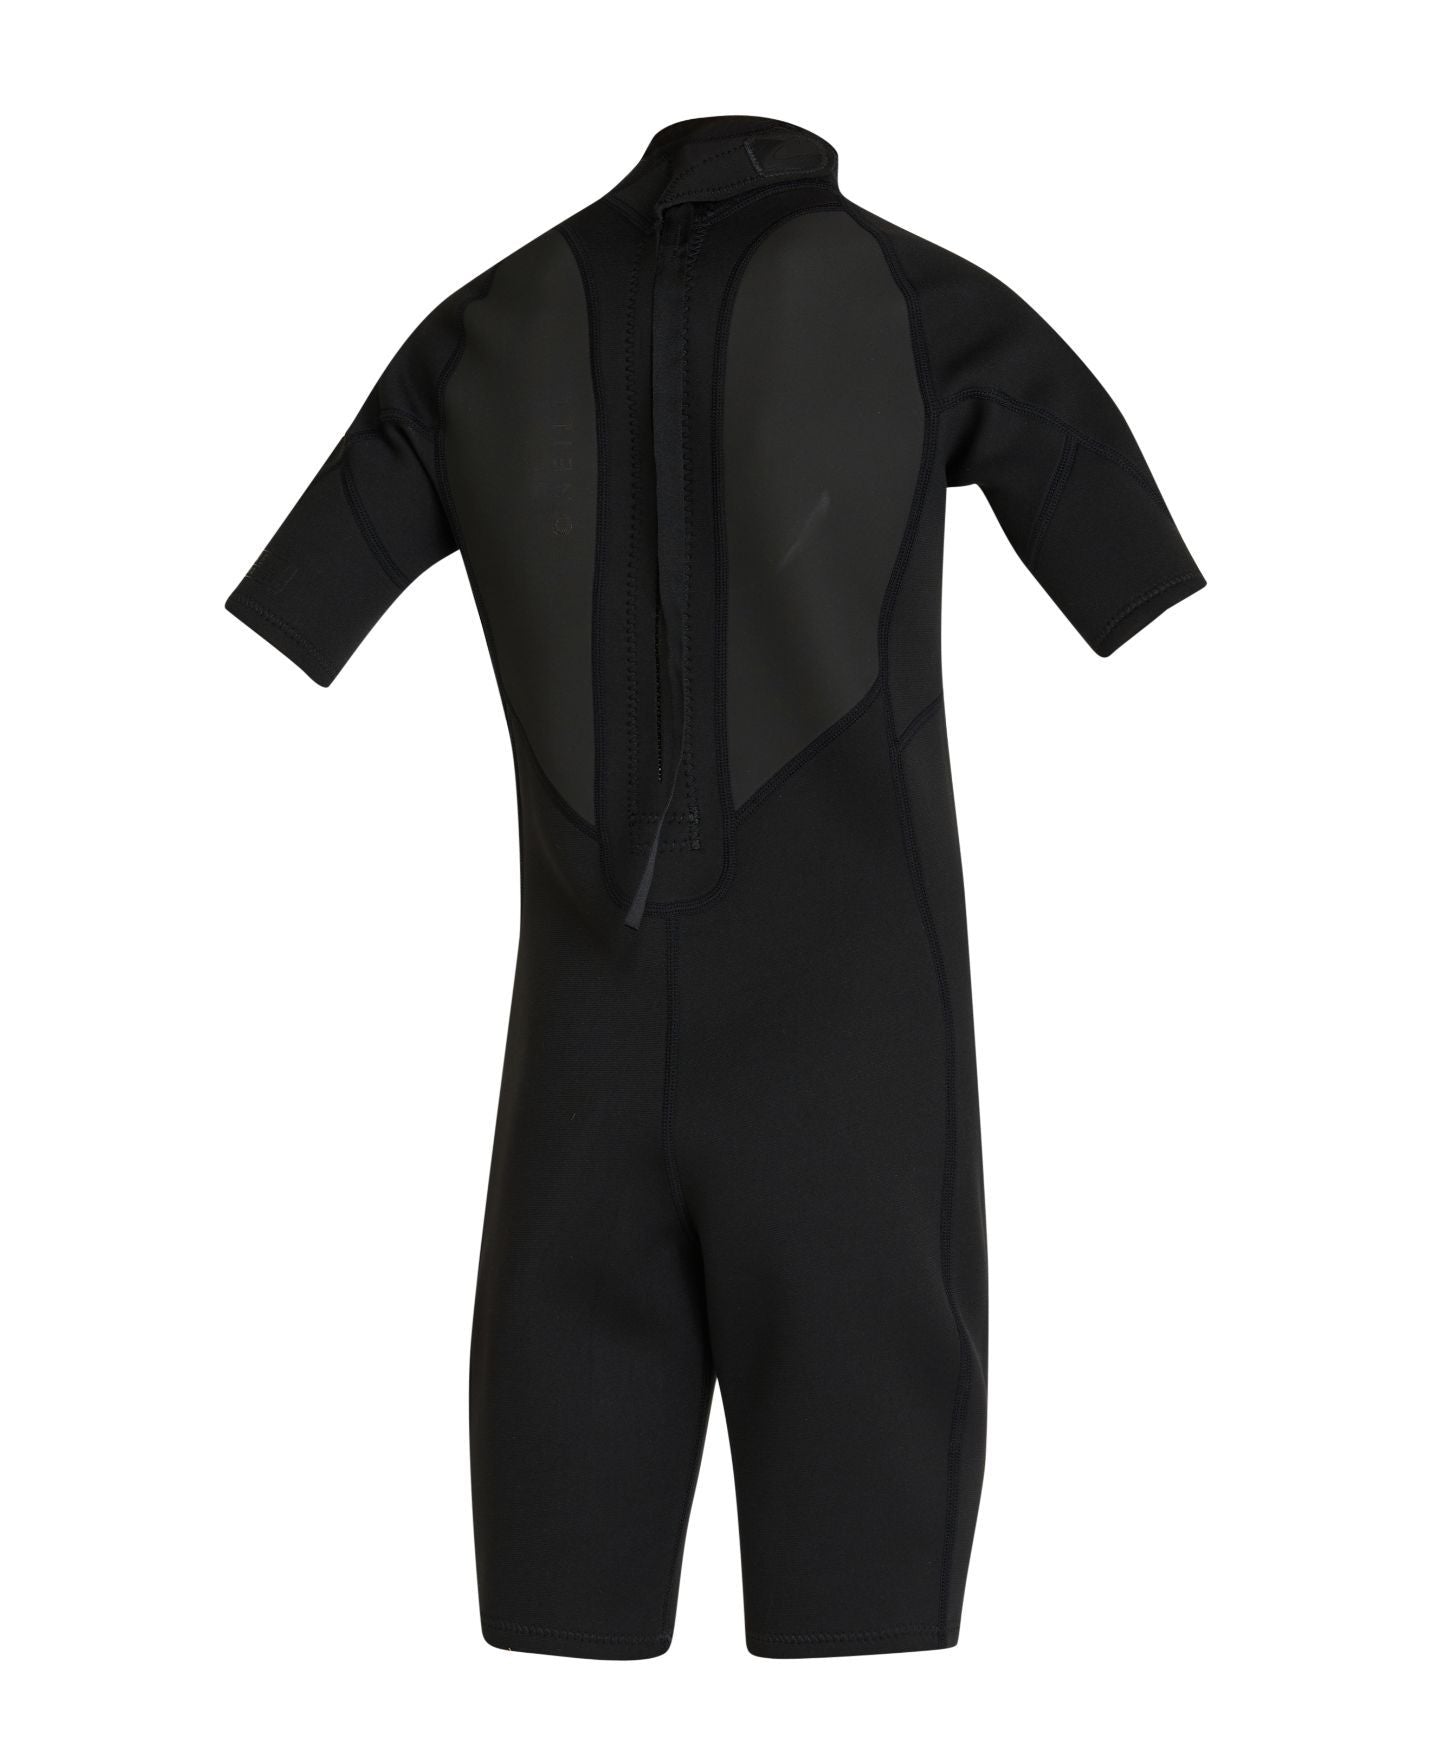 Kid's Factor Short Sleeve Spring Suit 2mm Wetsuit - Black